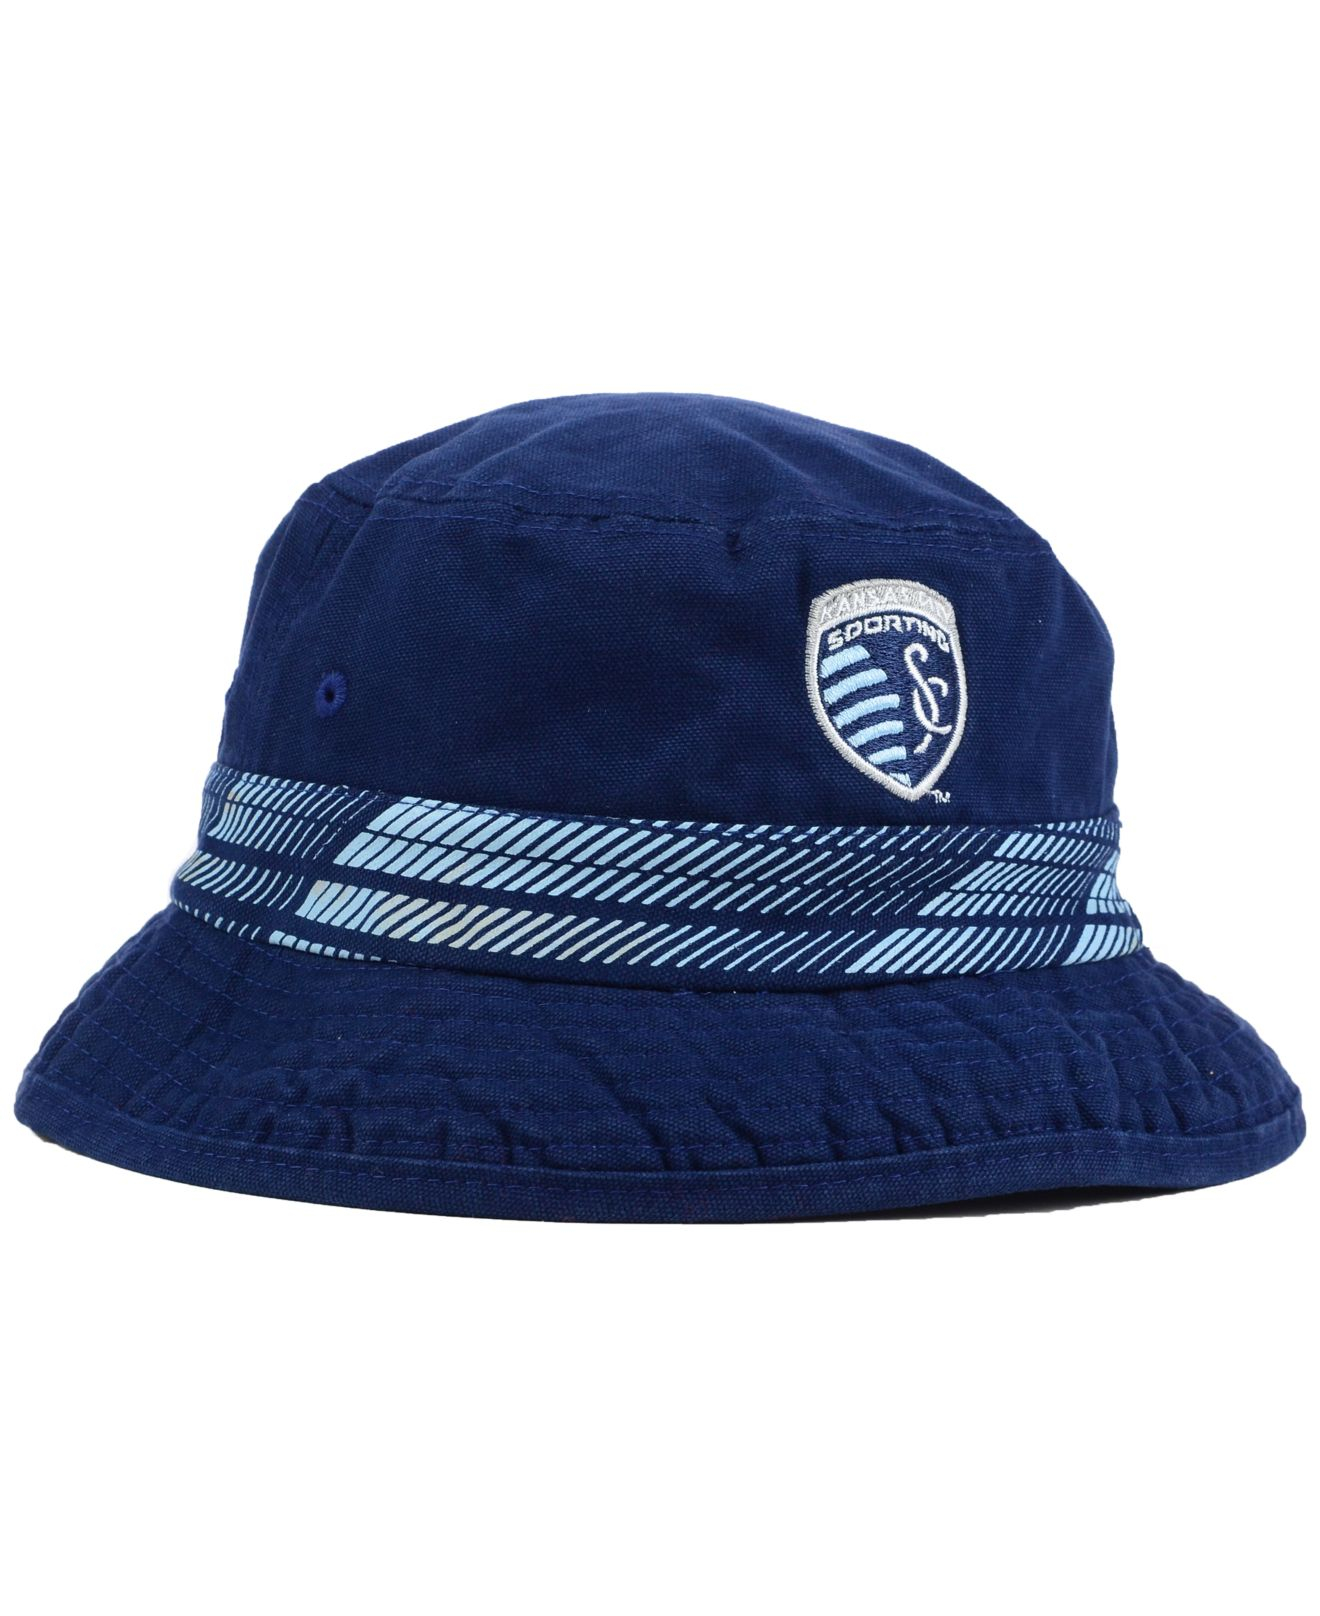 Lyst - Adidas Sporting Kansas City Evolution Bucket Hat in Blue for Men